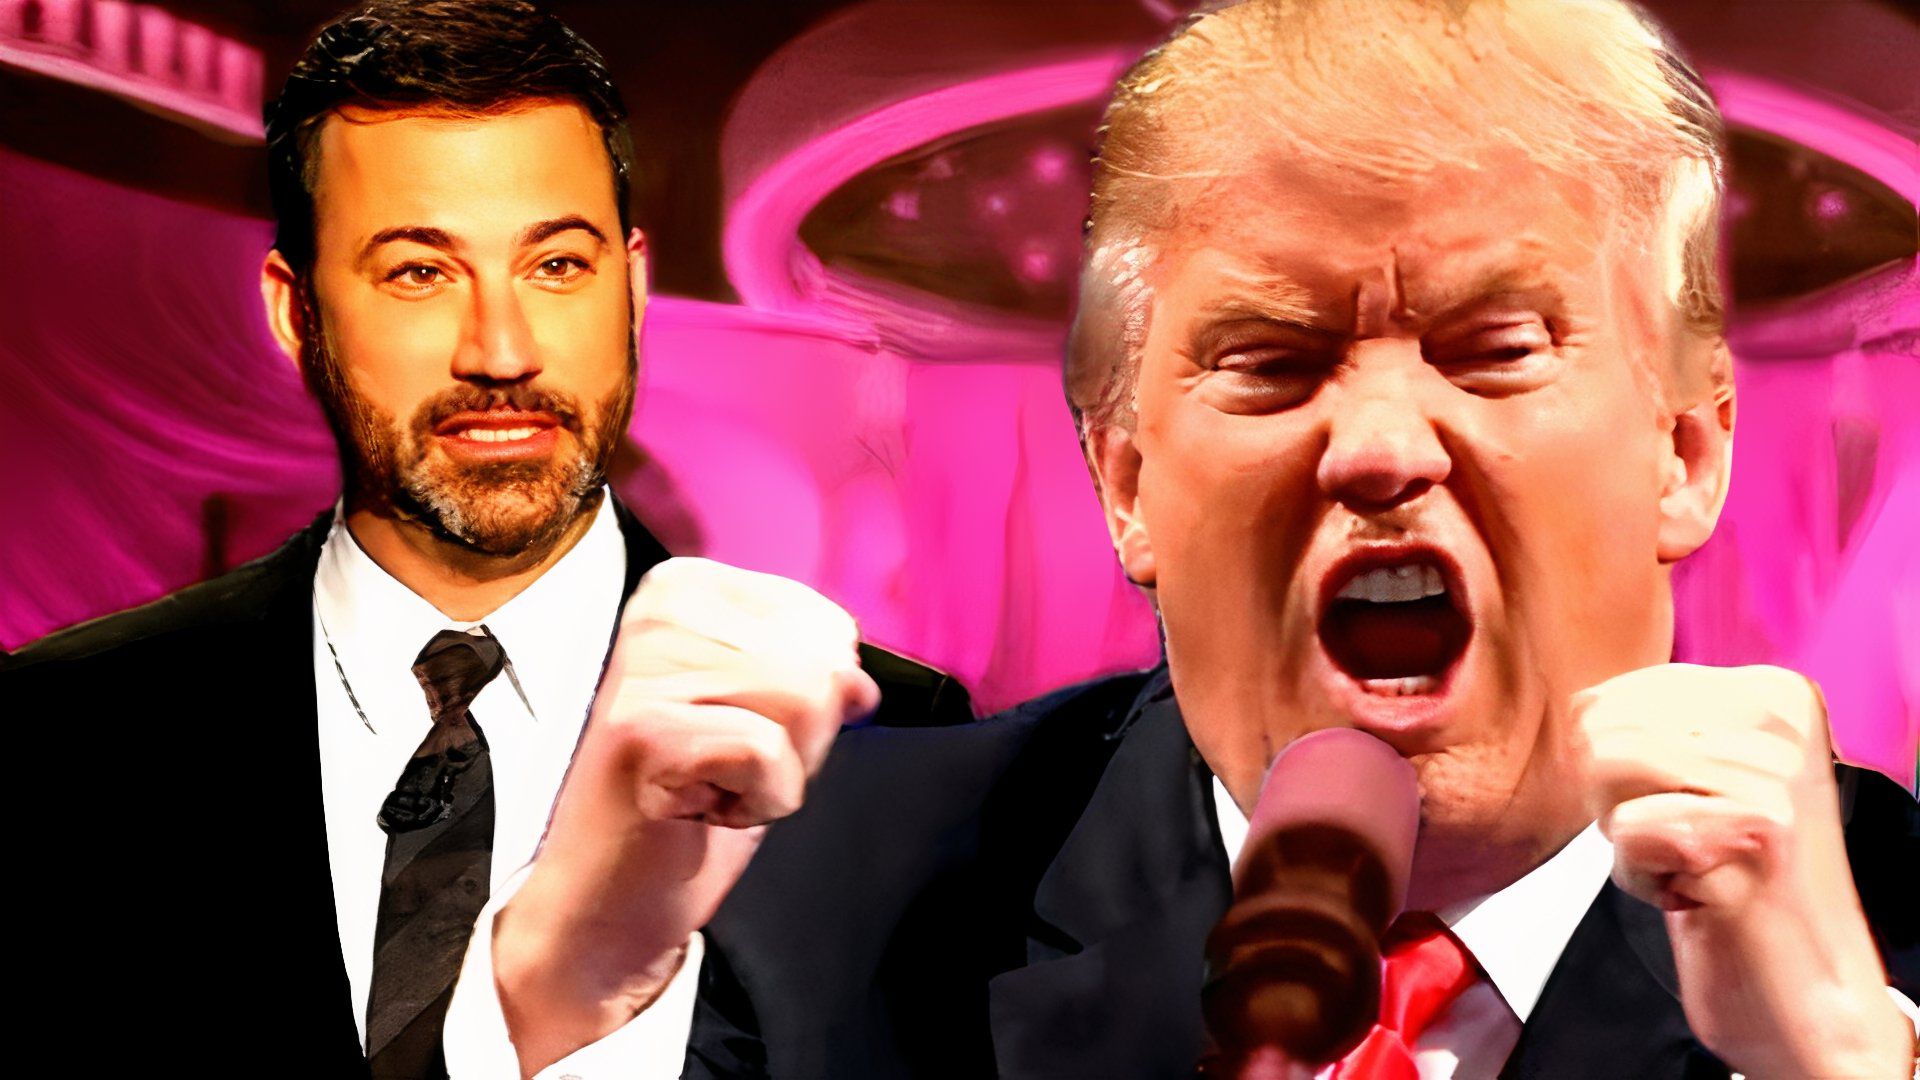 Donald Trump raging and Jimmy Kimmel